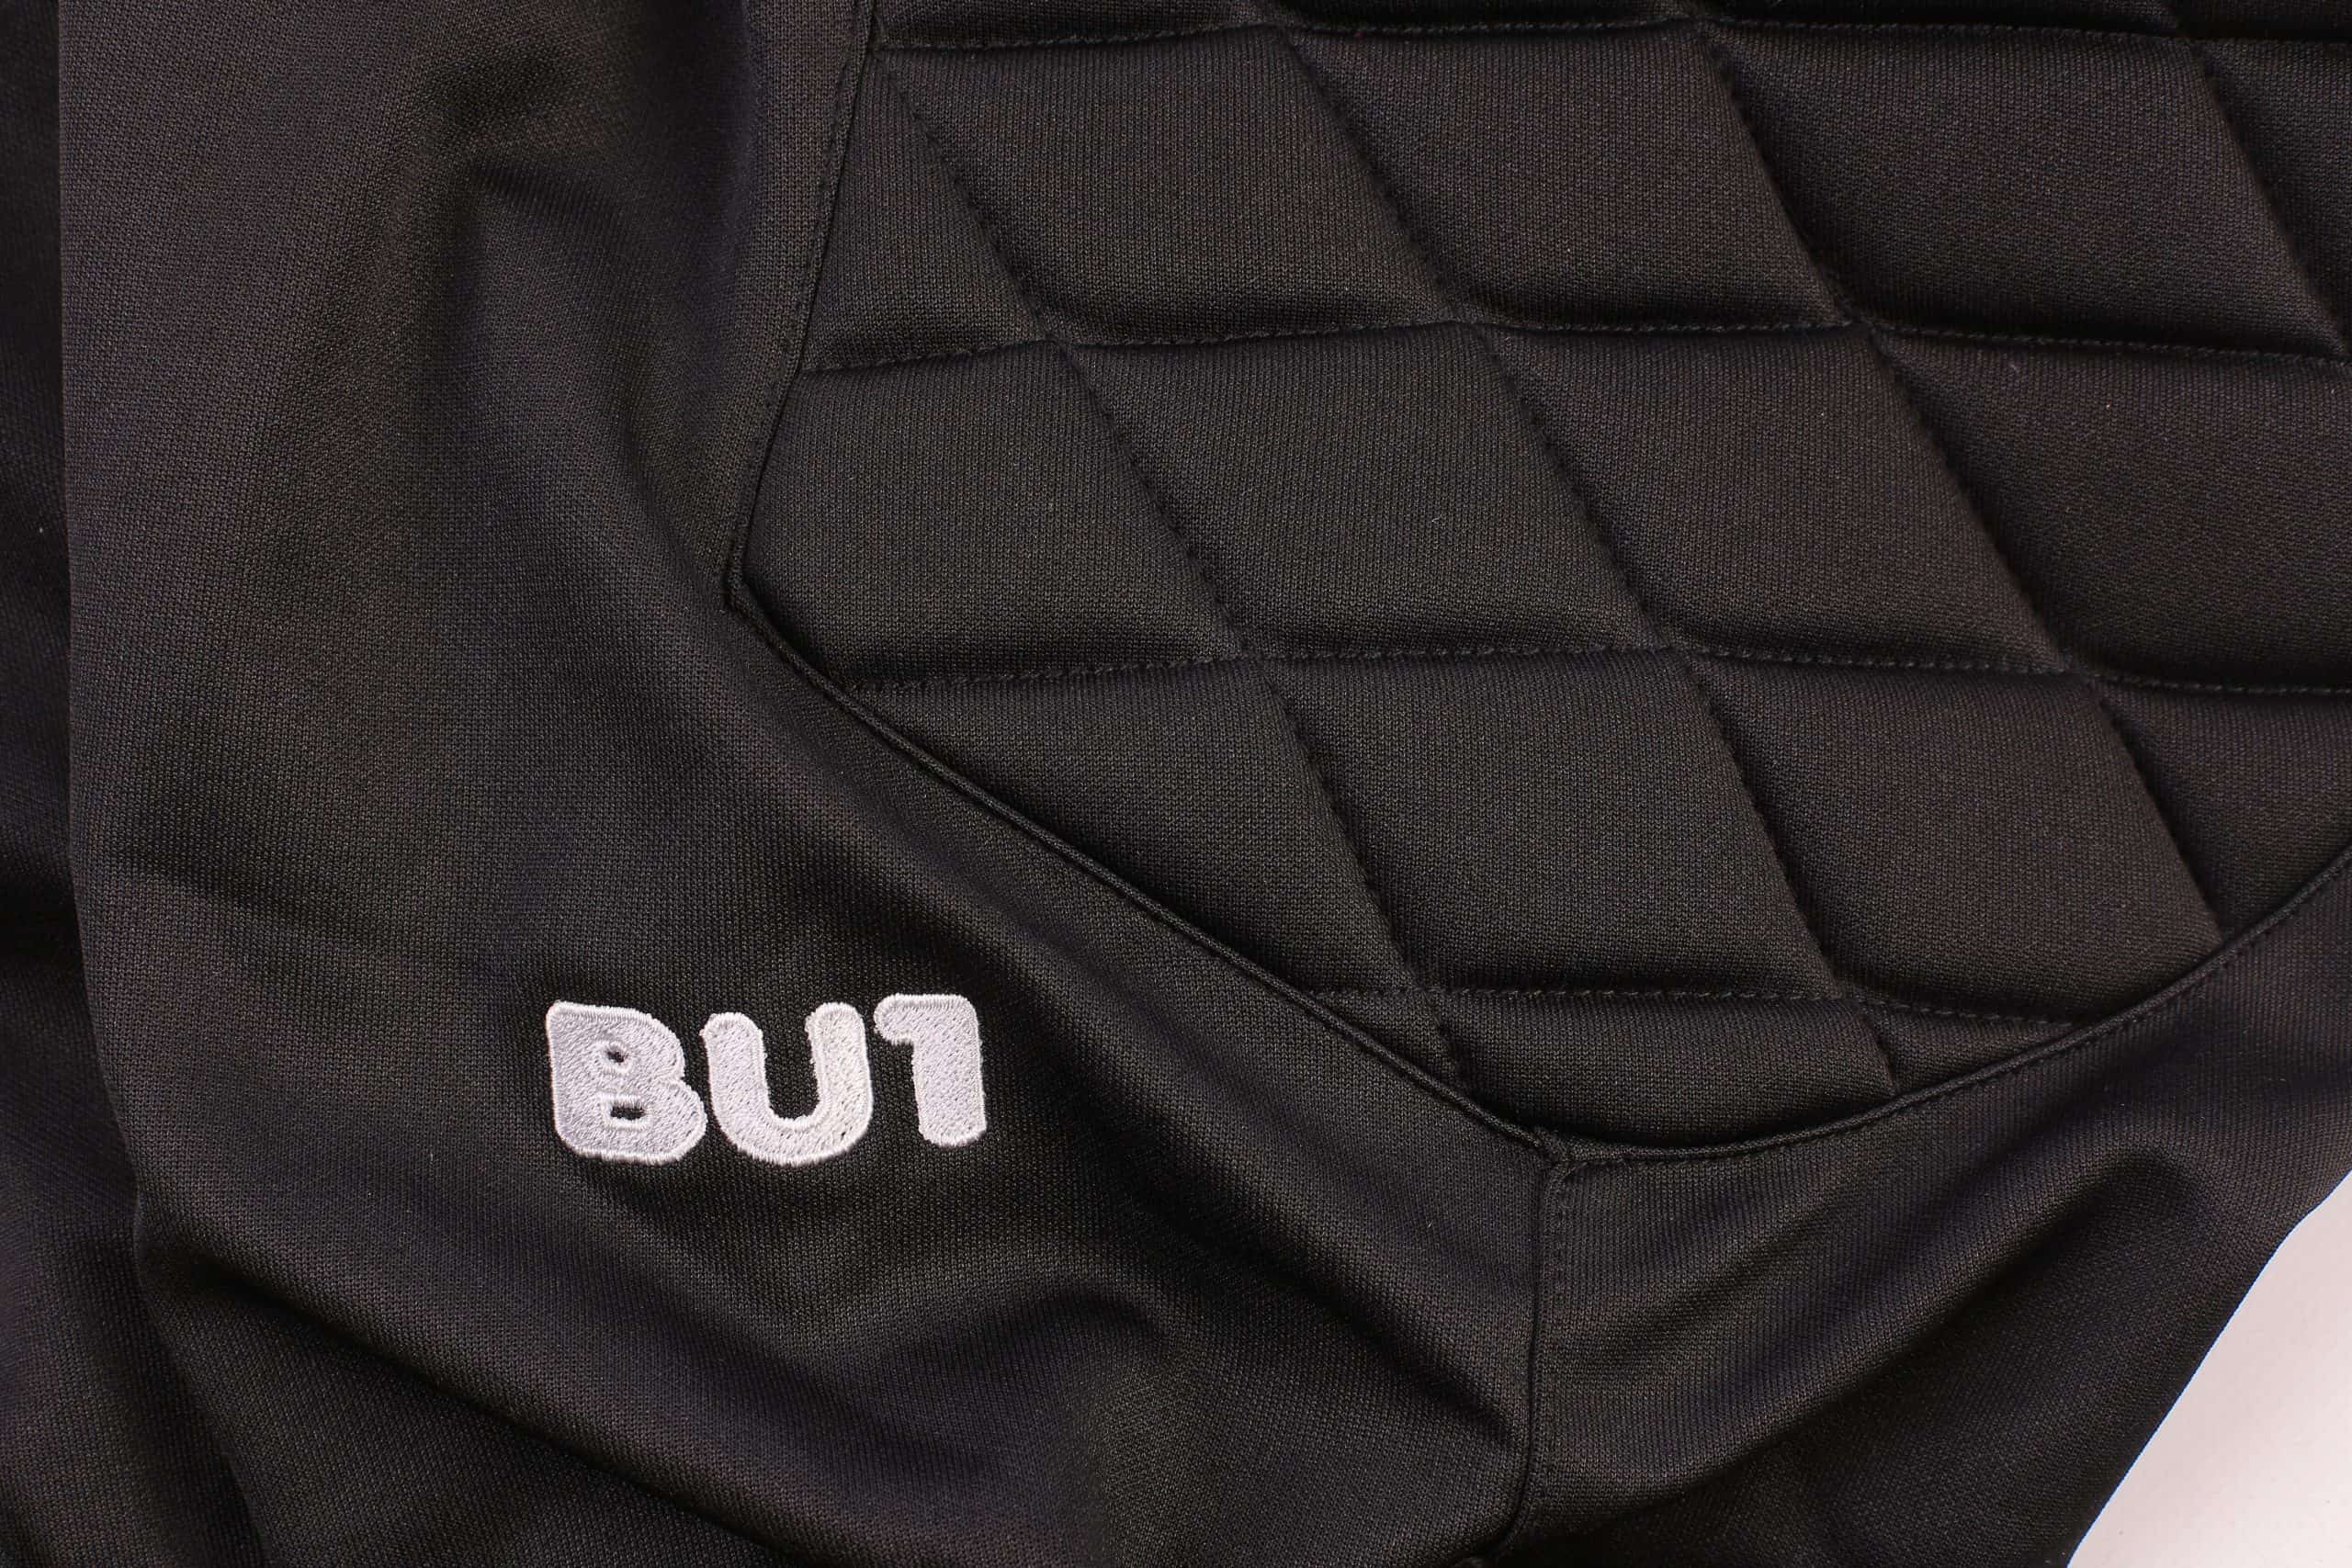 BU1 goalkeeper sweatpants